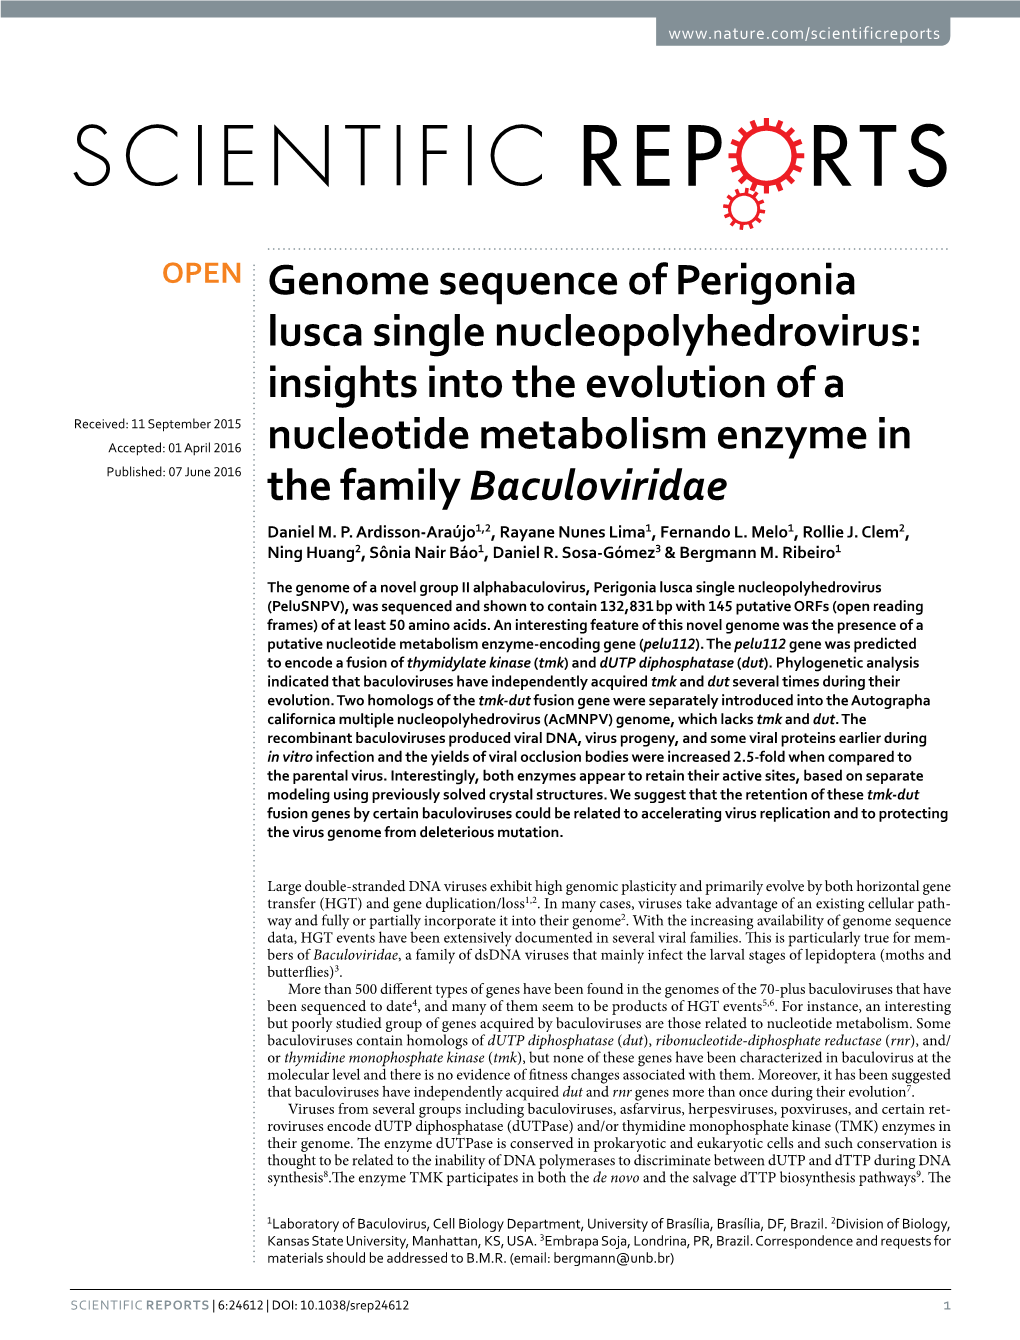 Genome Sequence of Perigonia Lusca Single